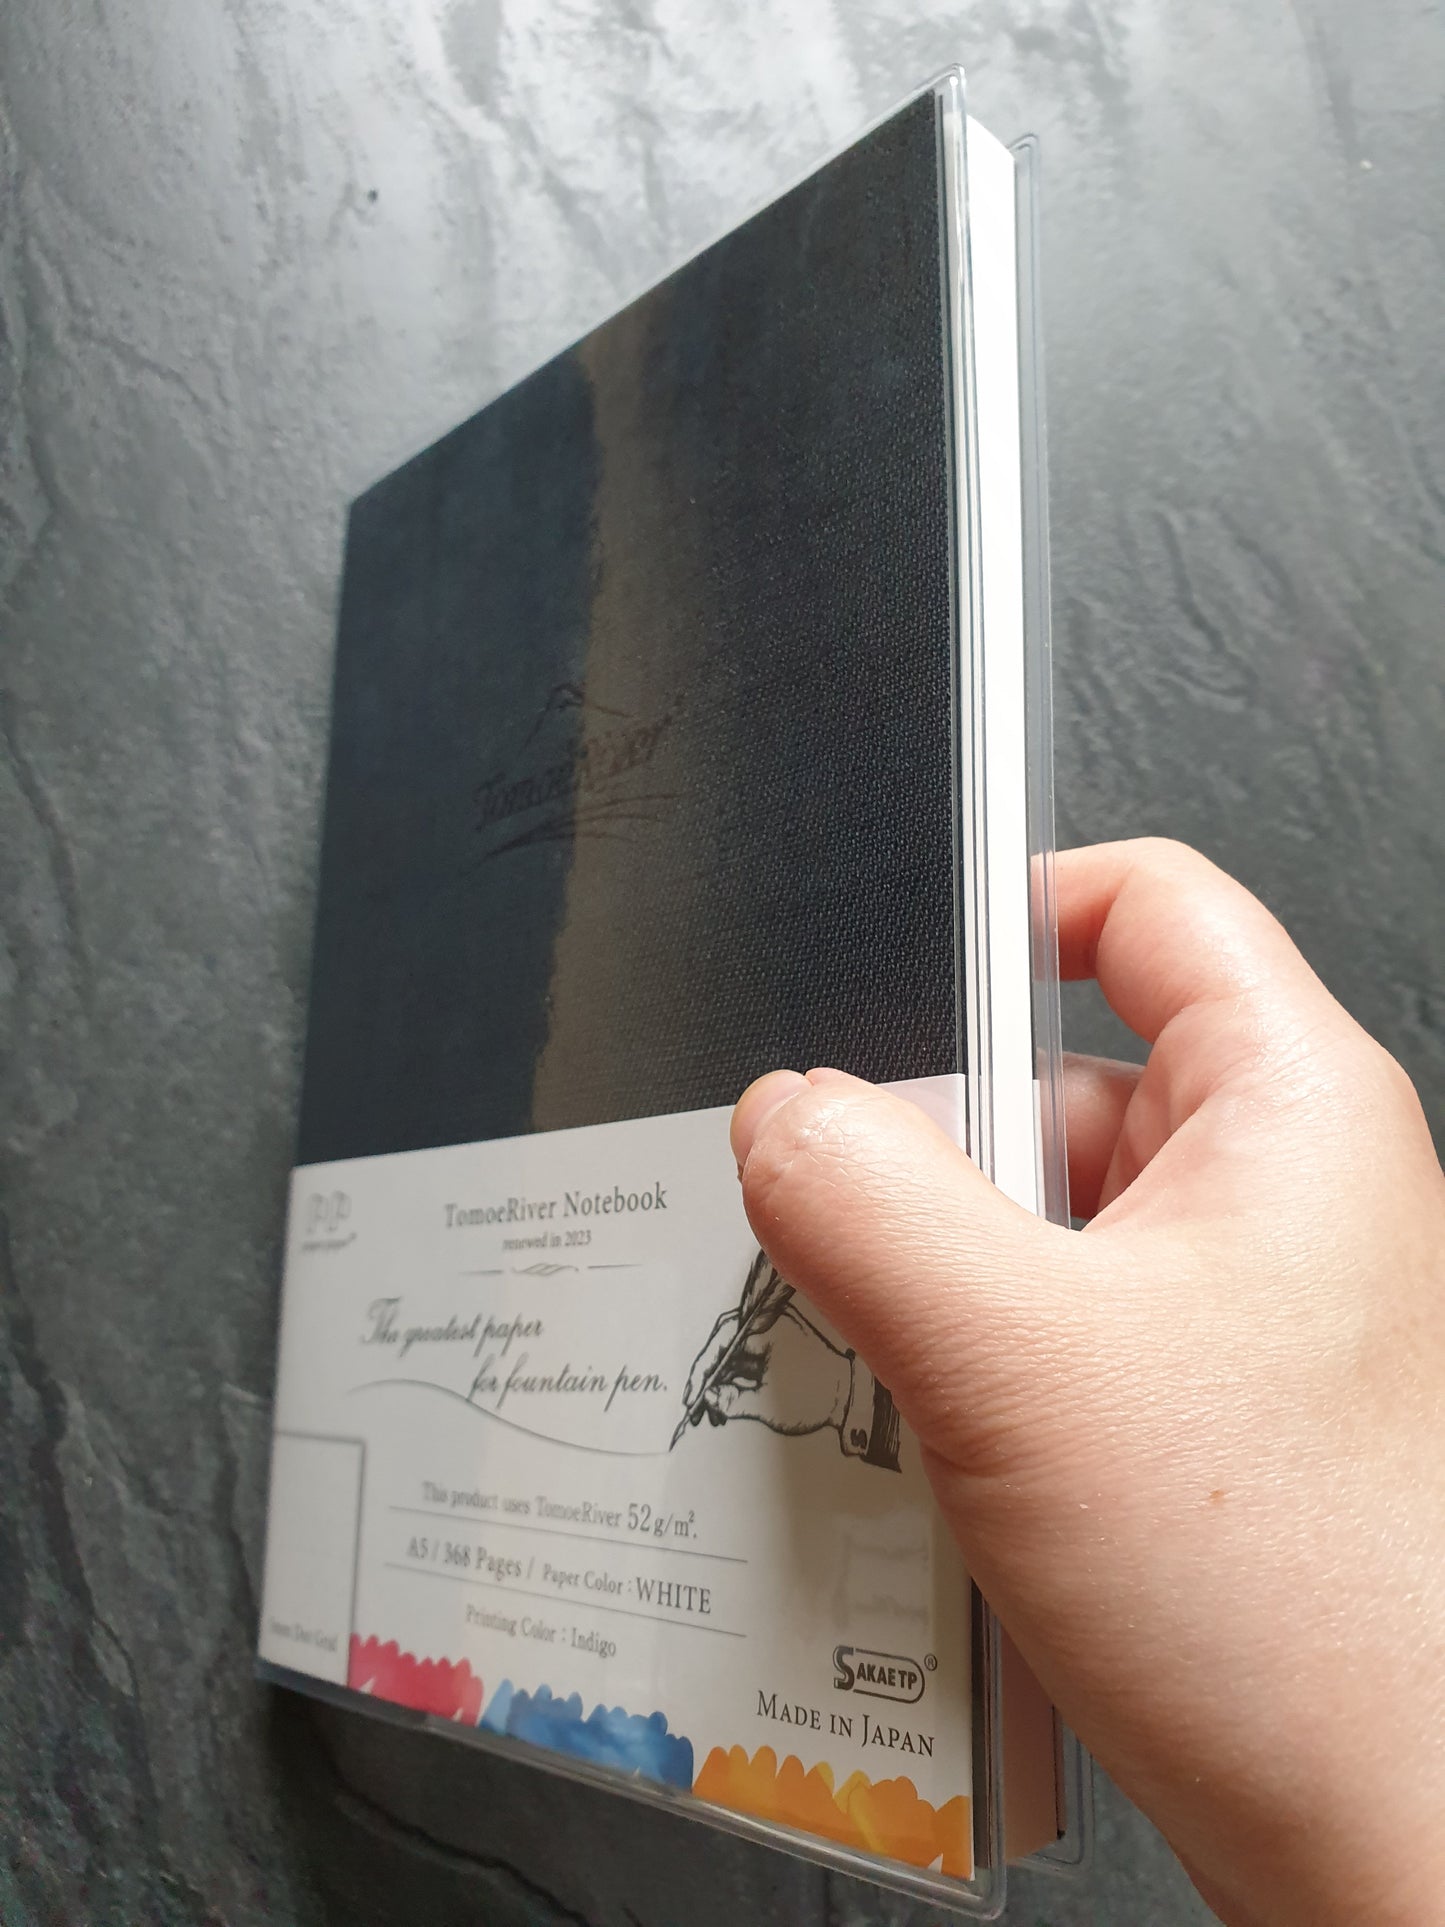 Hardcover Tomoe River Notizbuch, DIN A5, weißes Papier, 3 Lineaturen